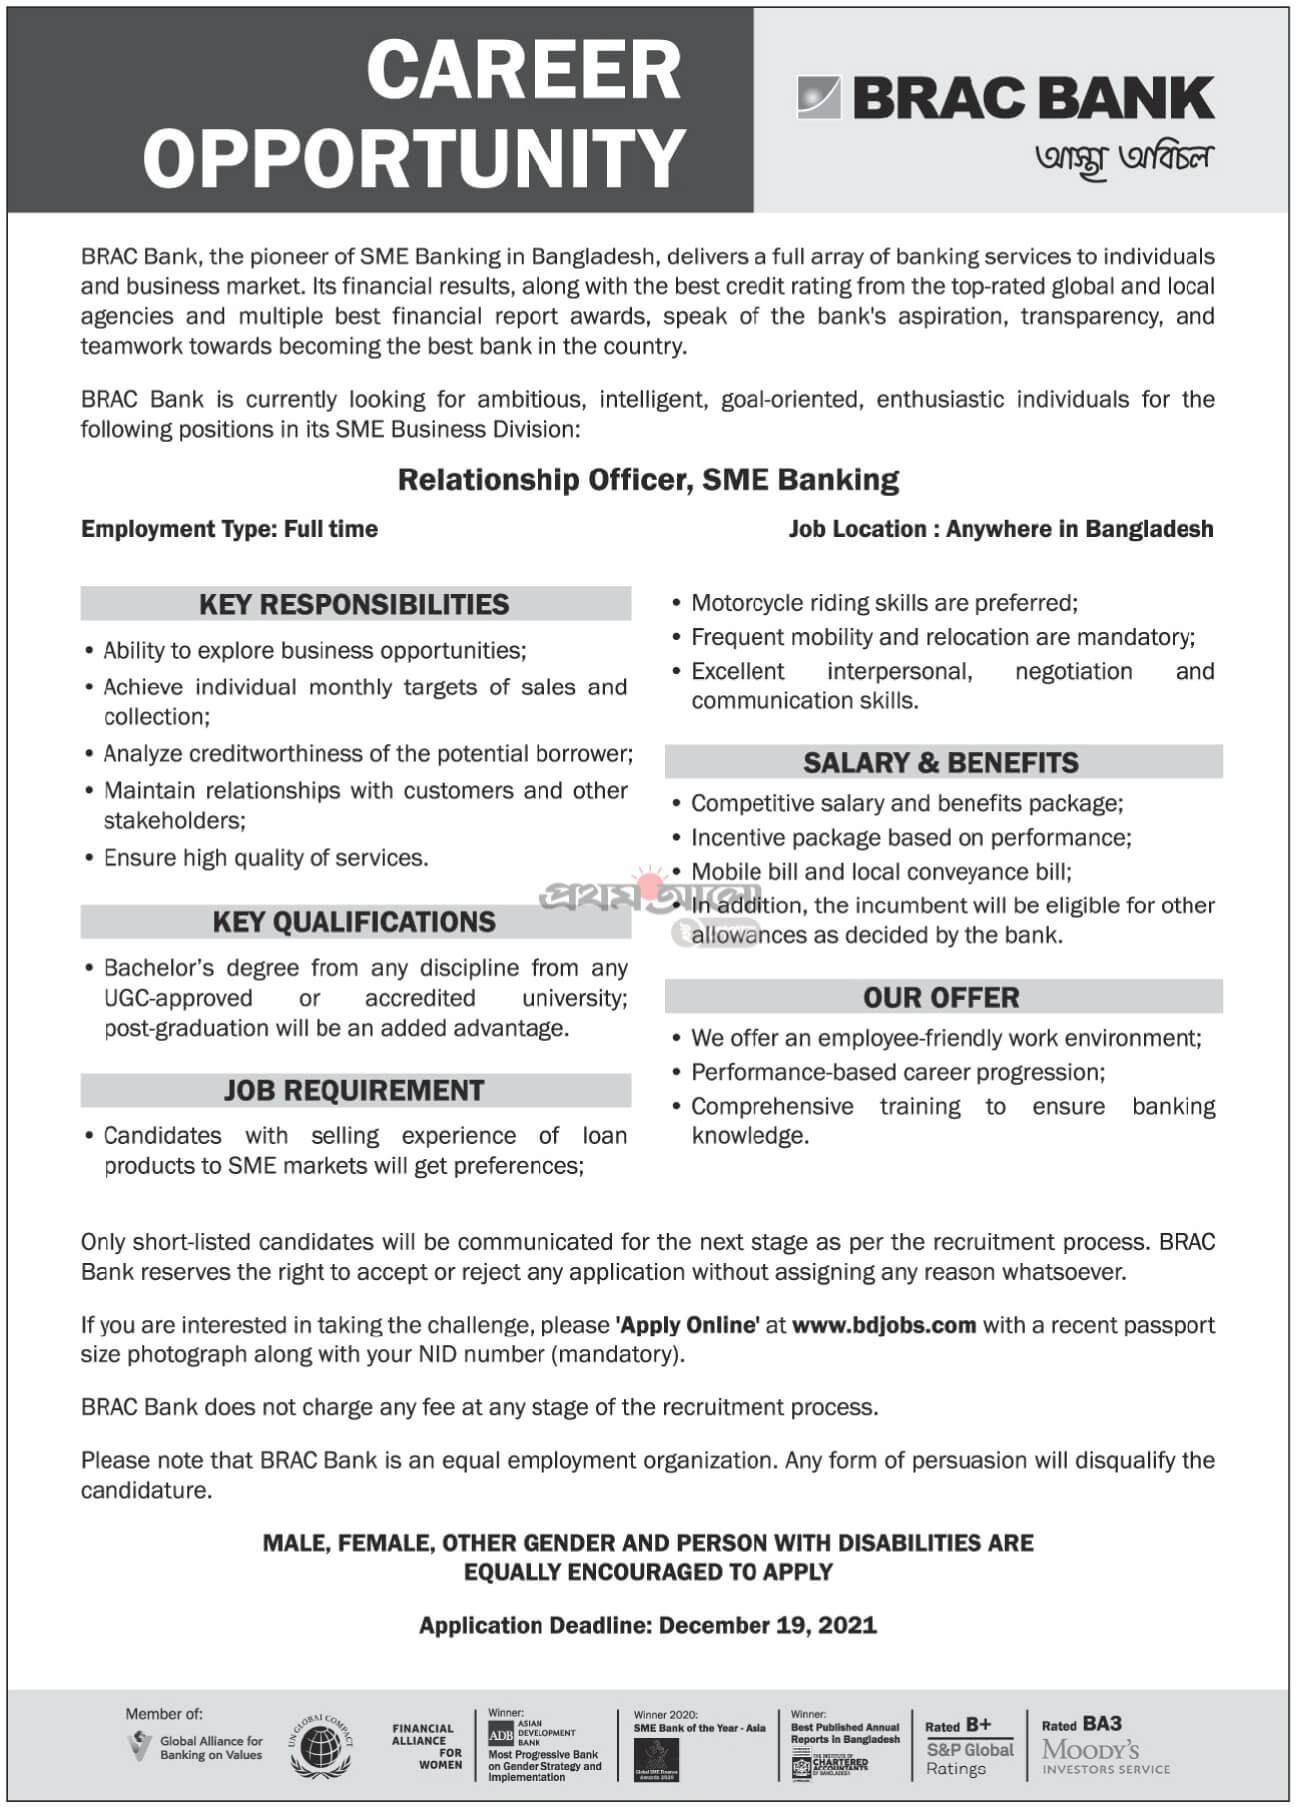 BRAC Bank Limited Job Circular image 2021